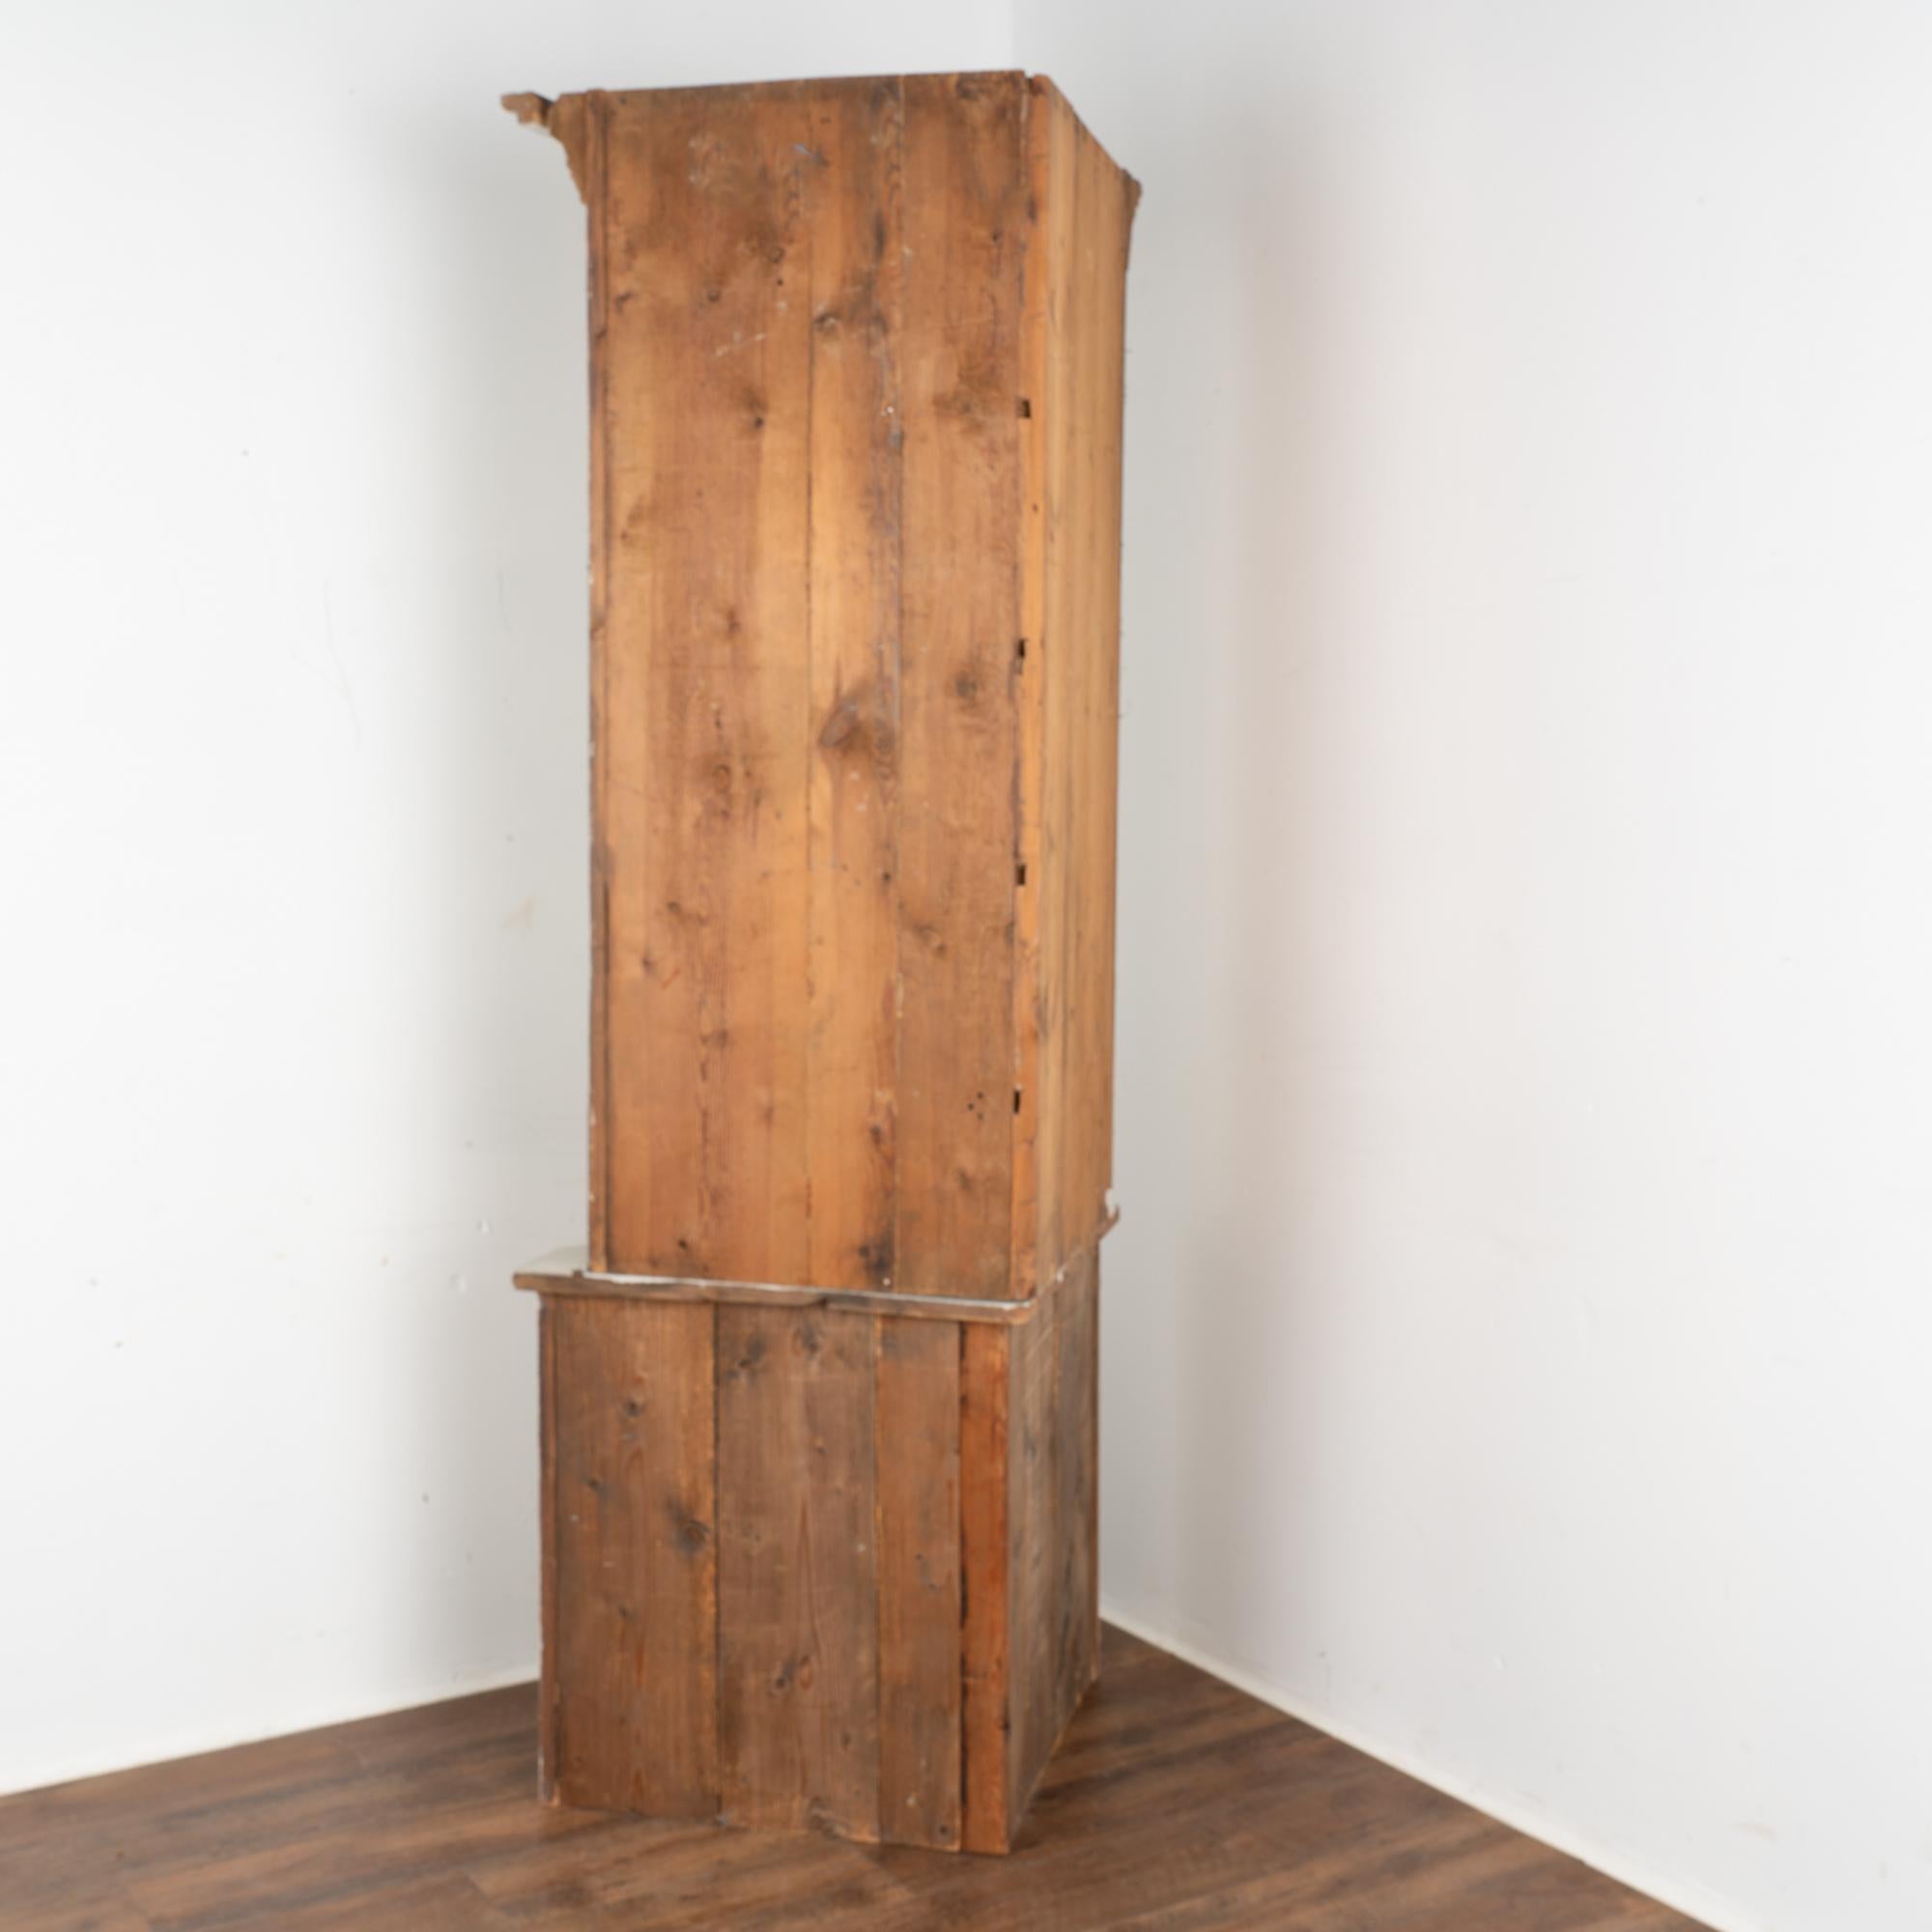 Tall White Corner Cabinet Cupboard, Sweden circa 1820-40 For Sale 1